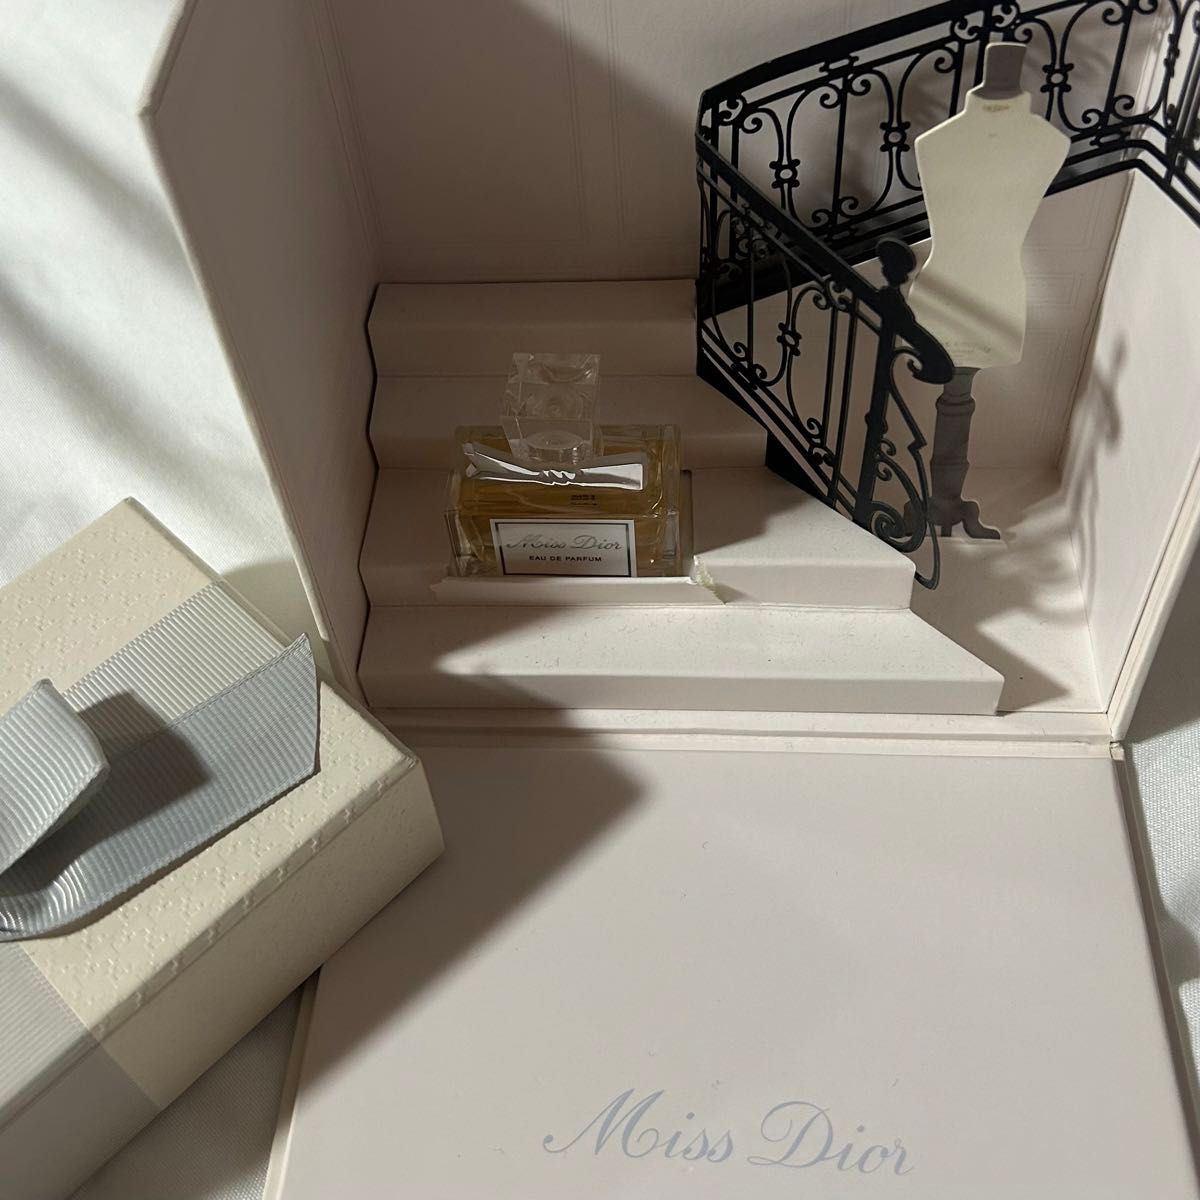 Christian Dior Miss Dior   EAU DE PARFUM